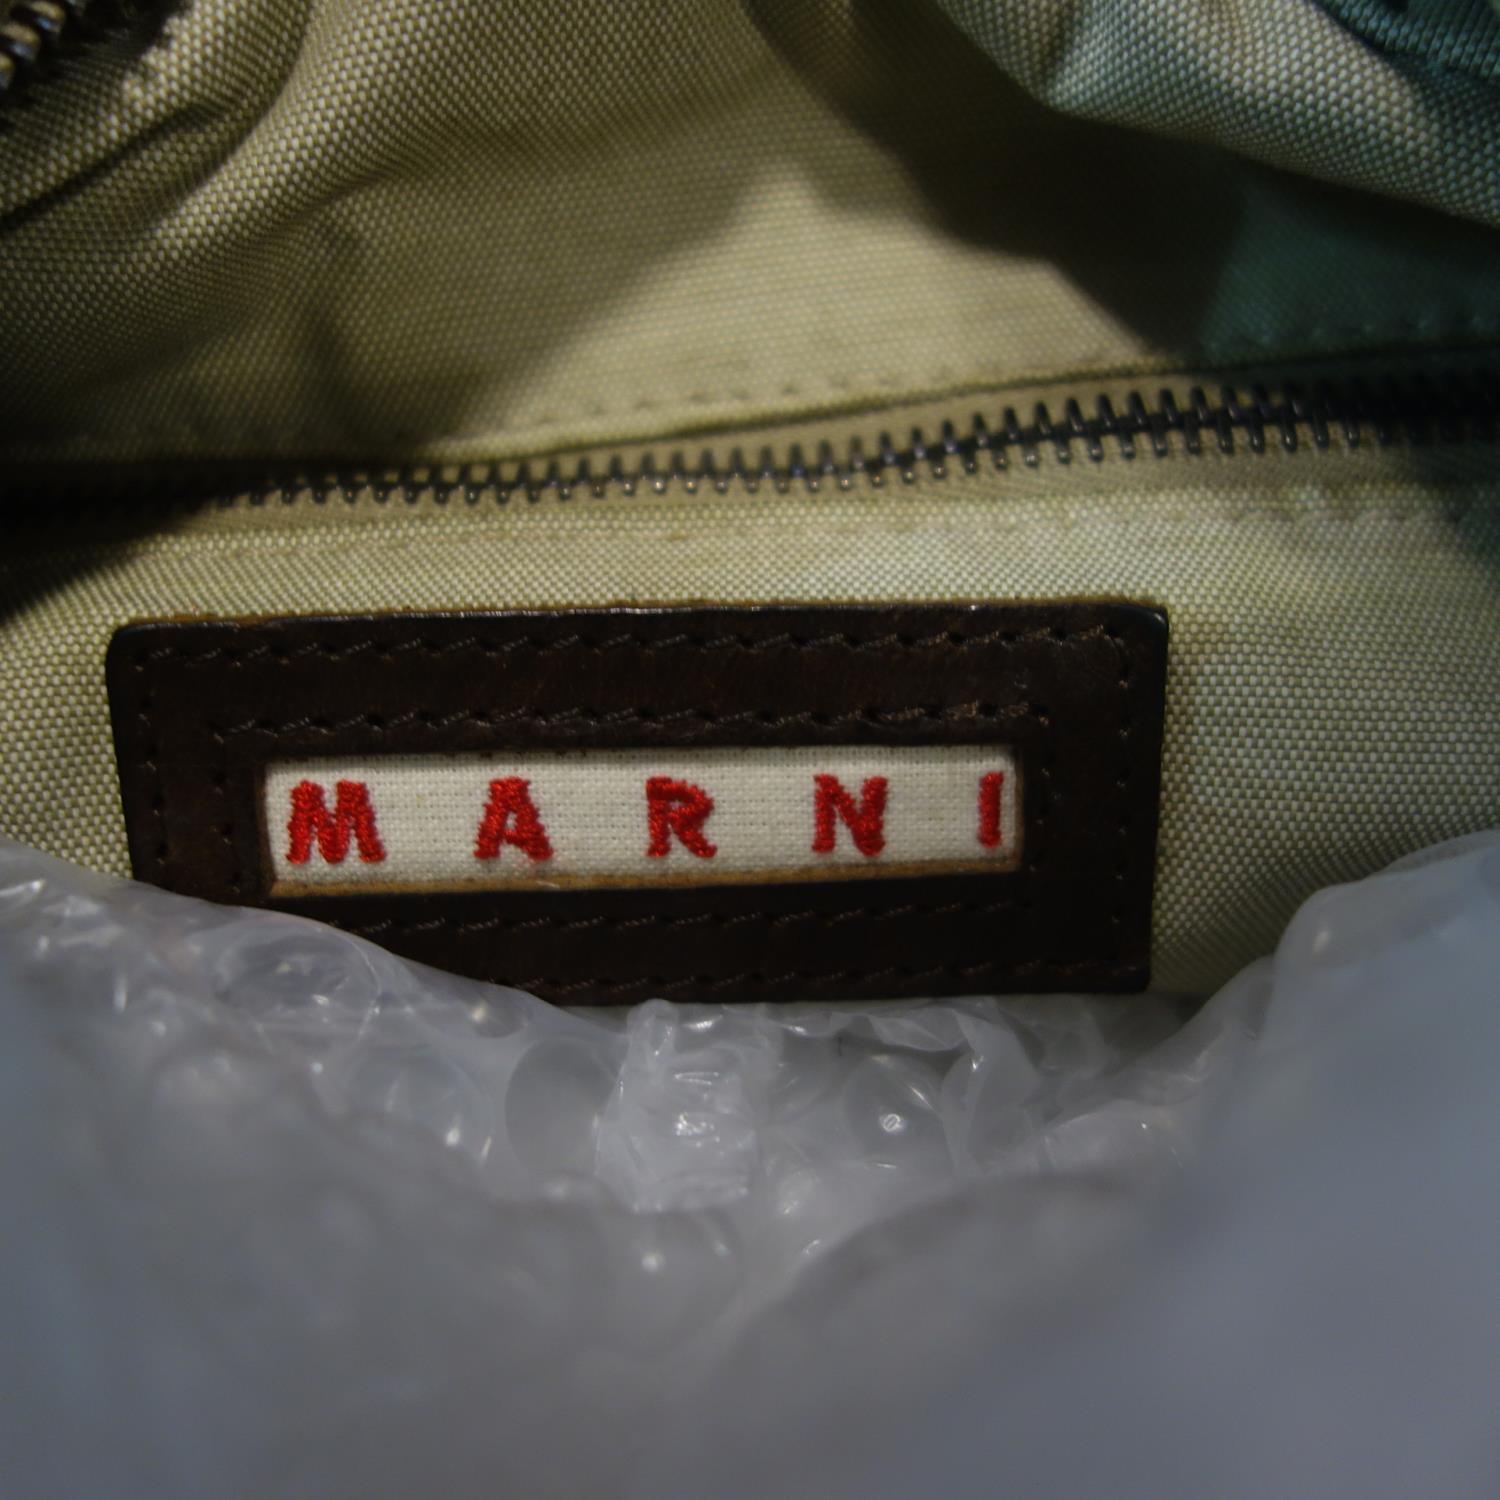 A Marni suede handbag together with a Marni red leather handbag - Image 4 of 5